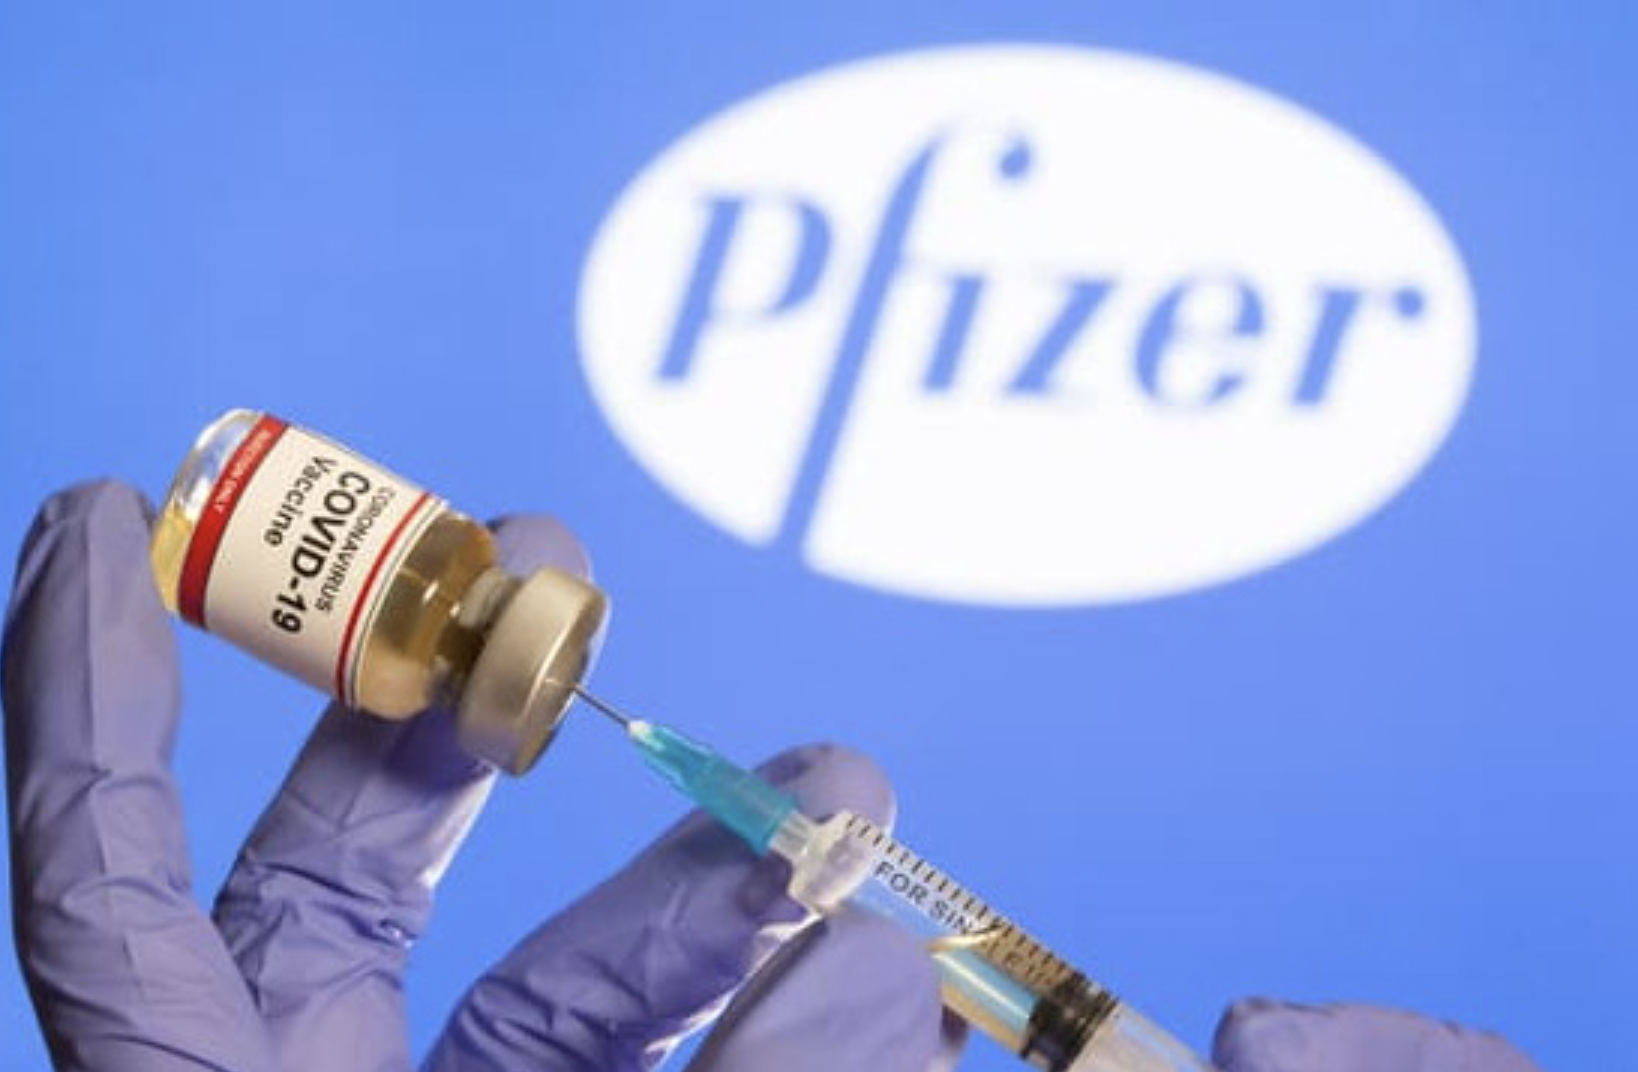 Pfizer Vaccine